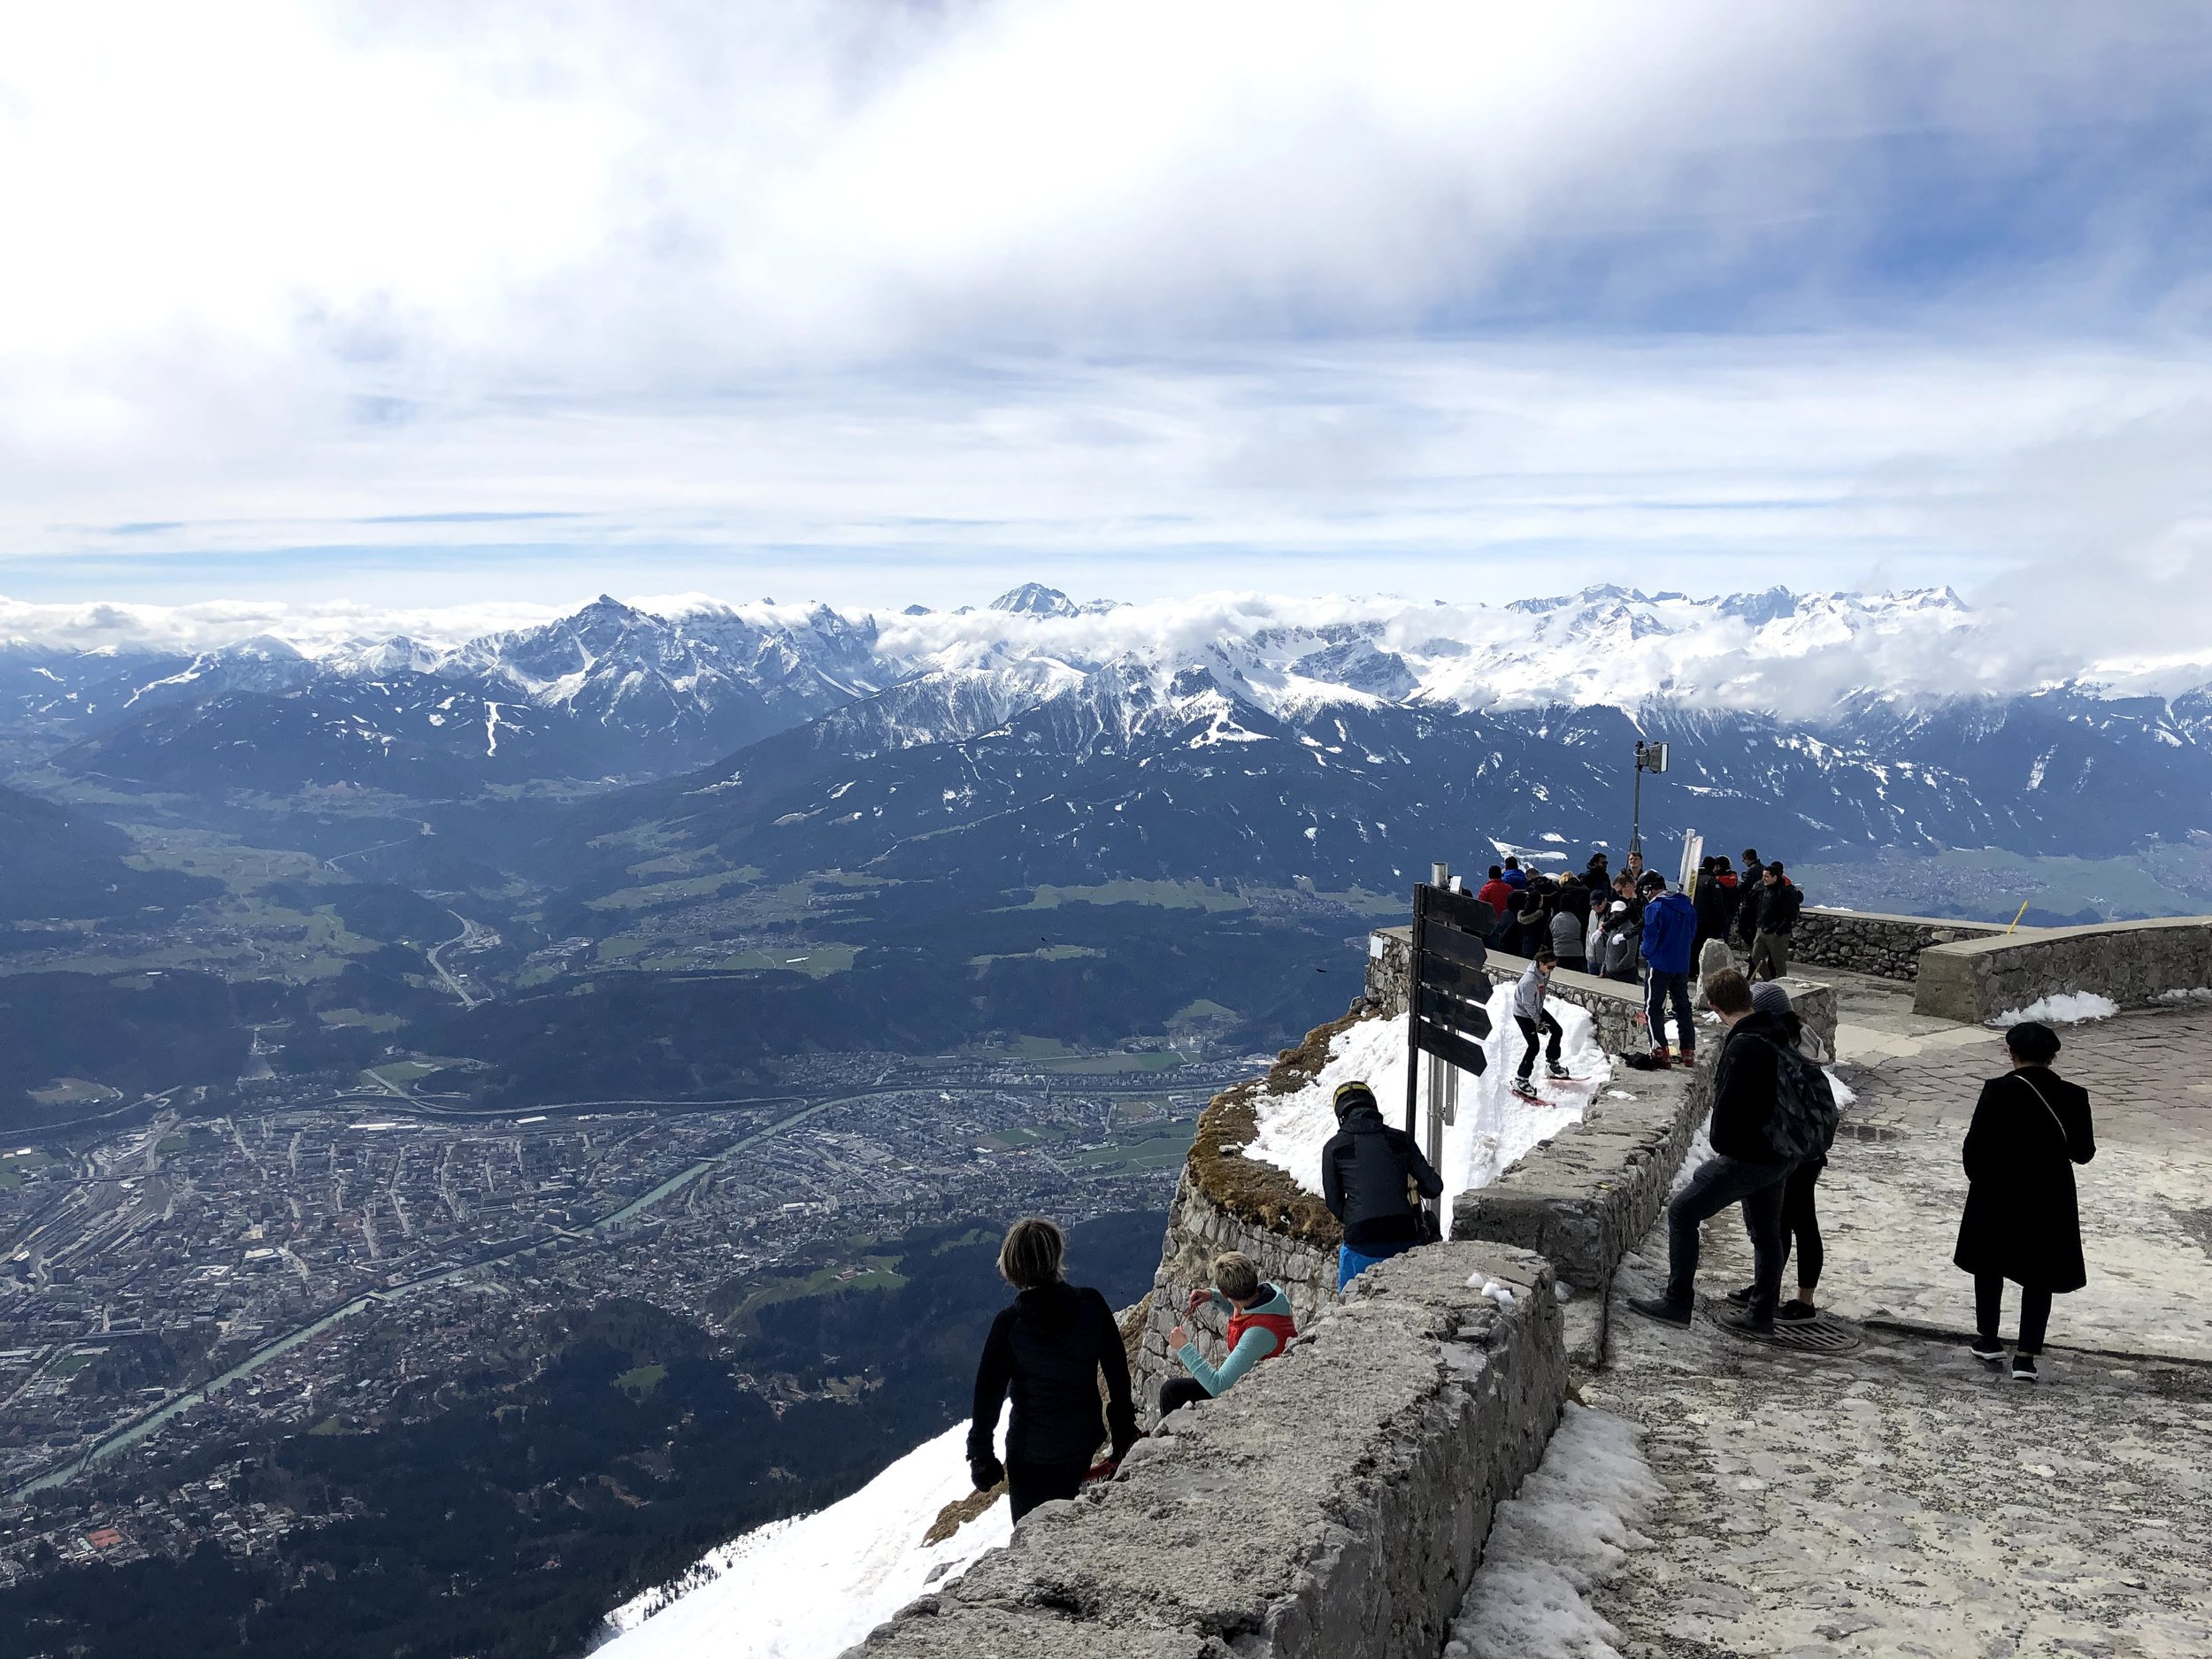 Hafelekar in the Nordkette mountains above Innsbruck